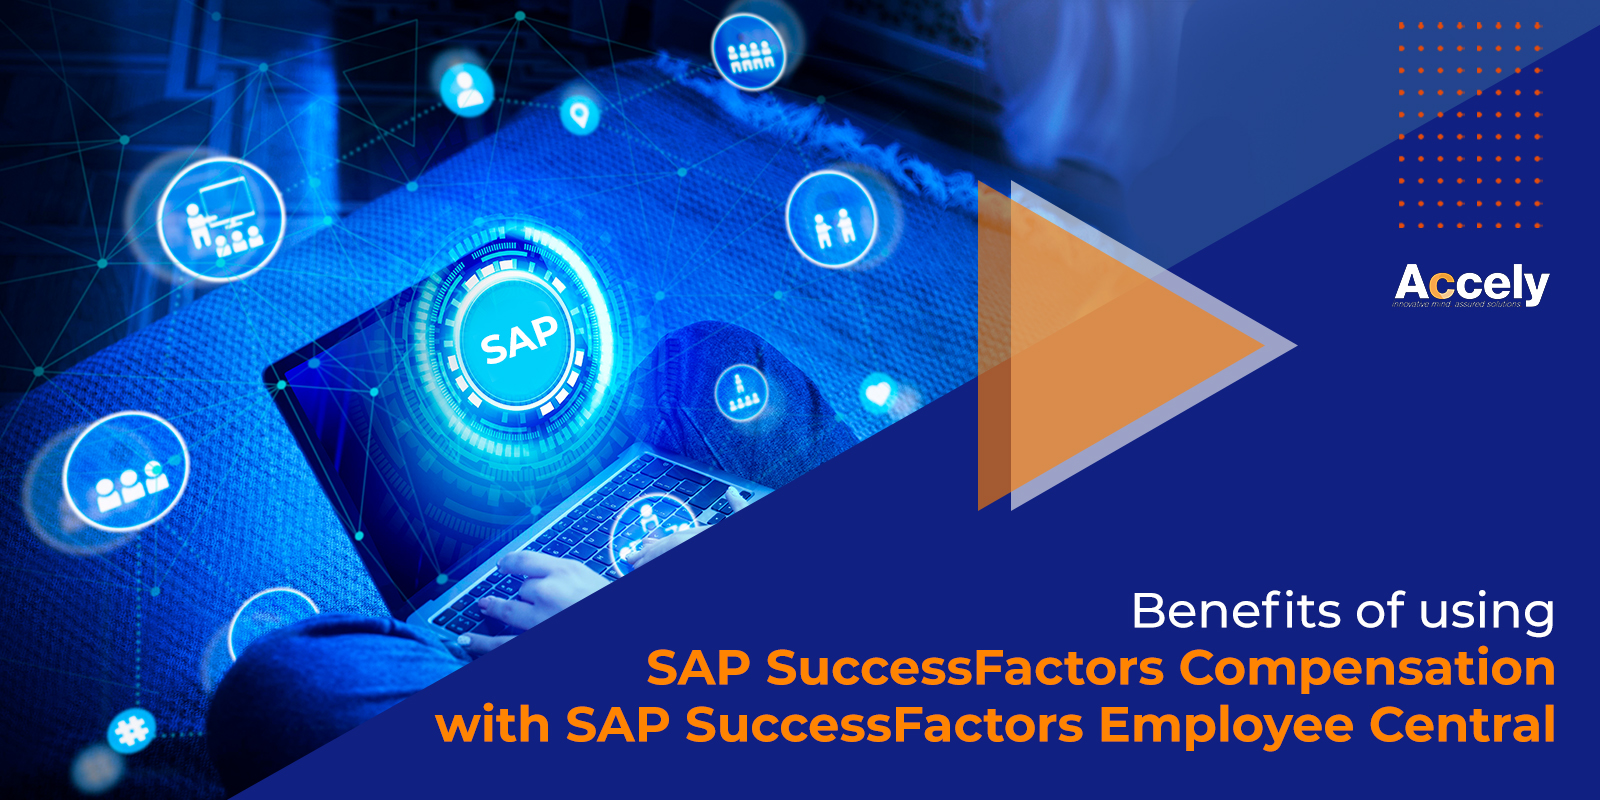 Benefits of using SAP SuccessFactors Compensation with SAP SuccessFactors Employee Central